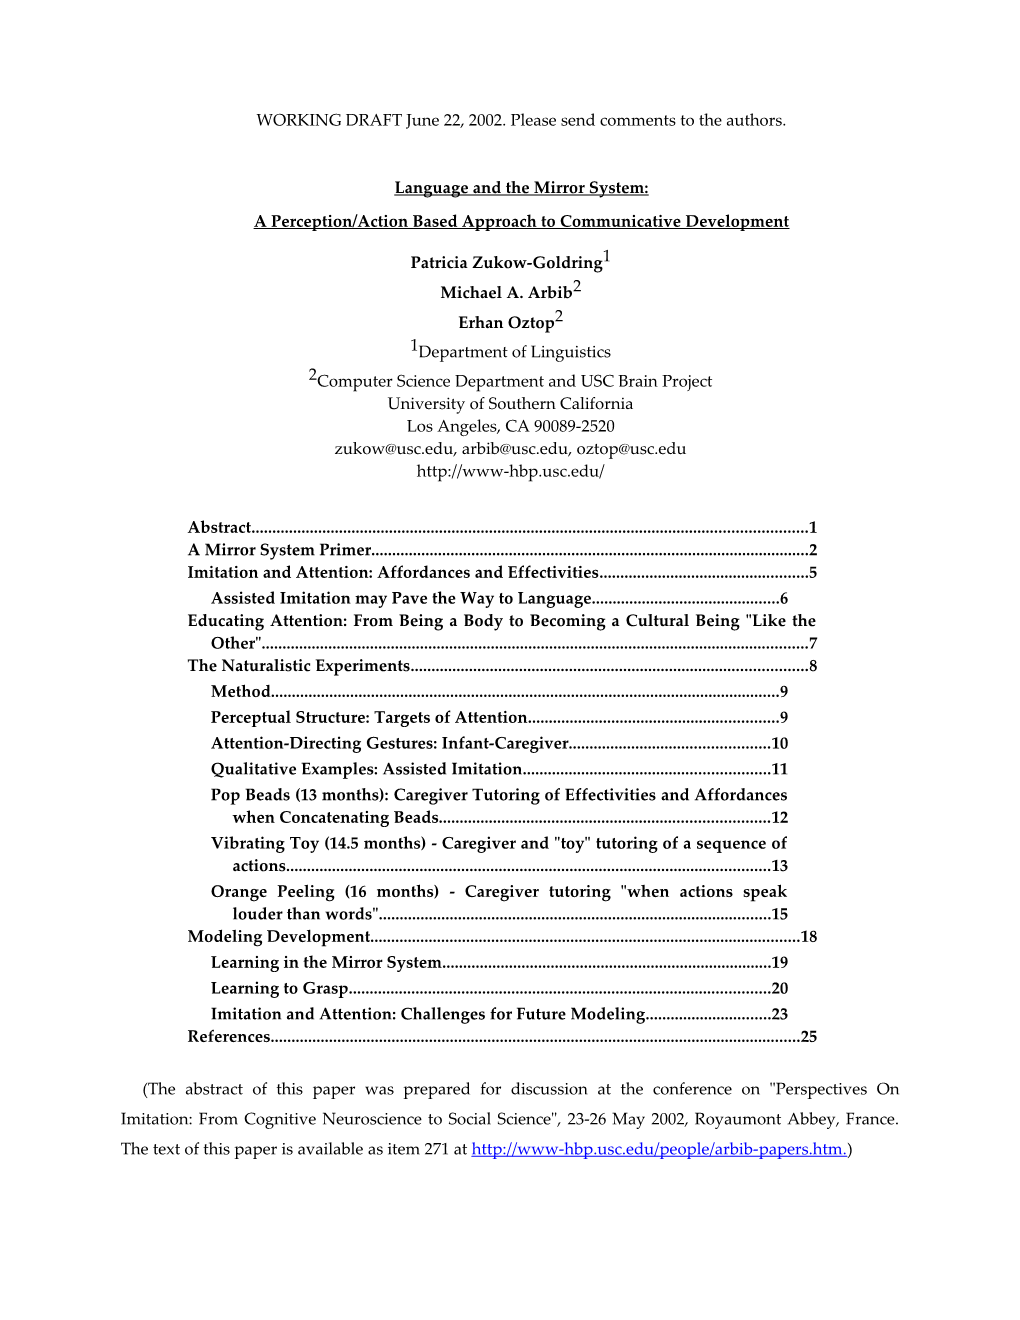 Zukow-Goldring, Arbib, and Oztopcommunicative Development1